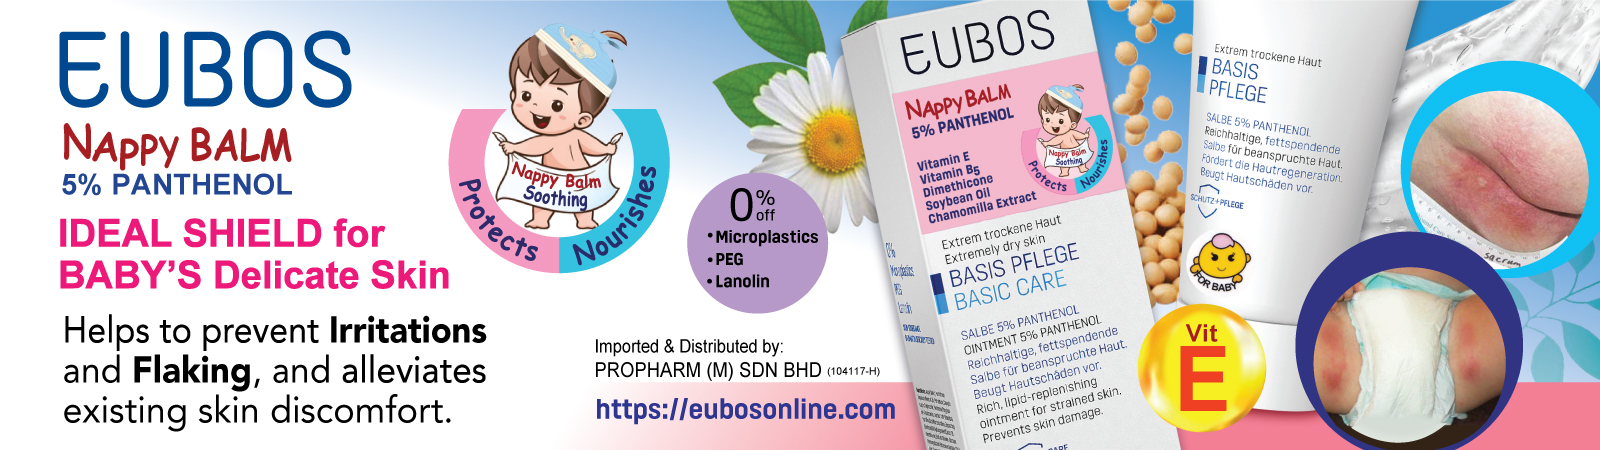 EUBOS Nappy Balm 5% Panthenol